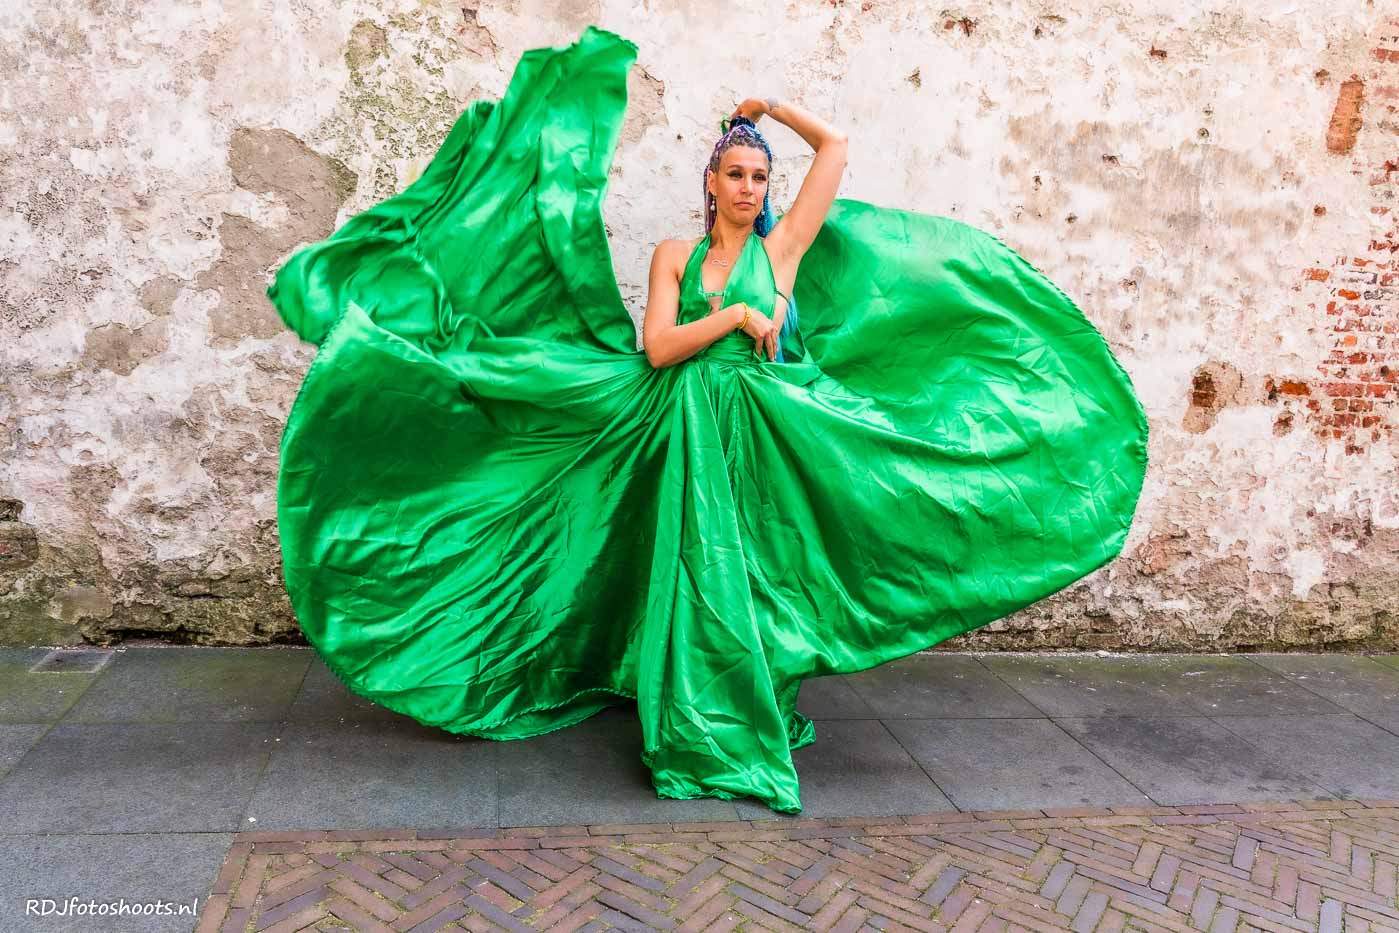 tfp dans: groene jurk